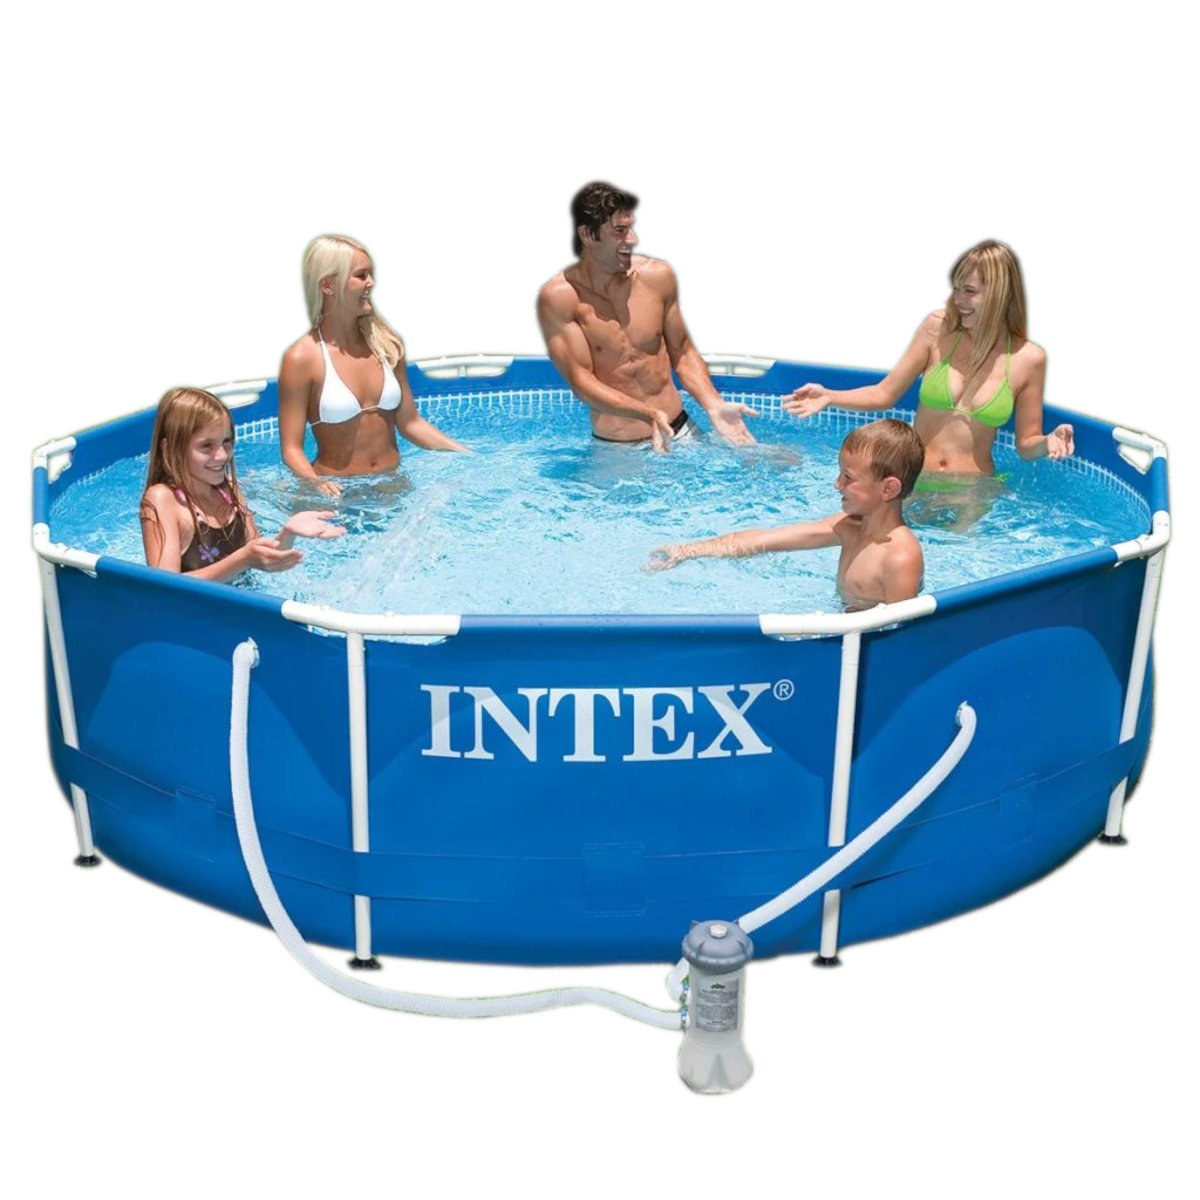 INTEX MetallFrame Pool 28202GN blau Solarabdeckplane Swimmingpool, mit